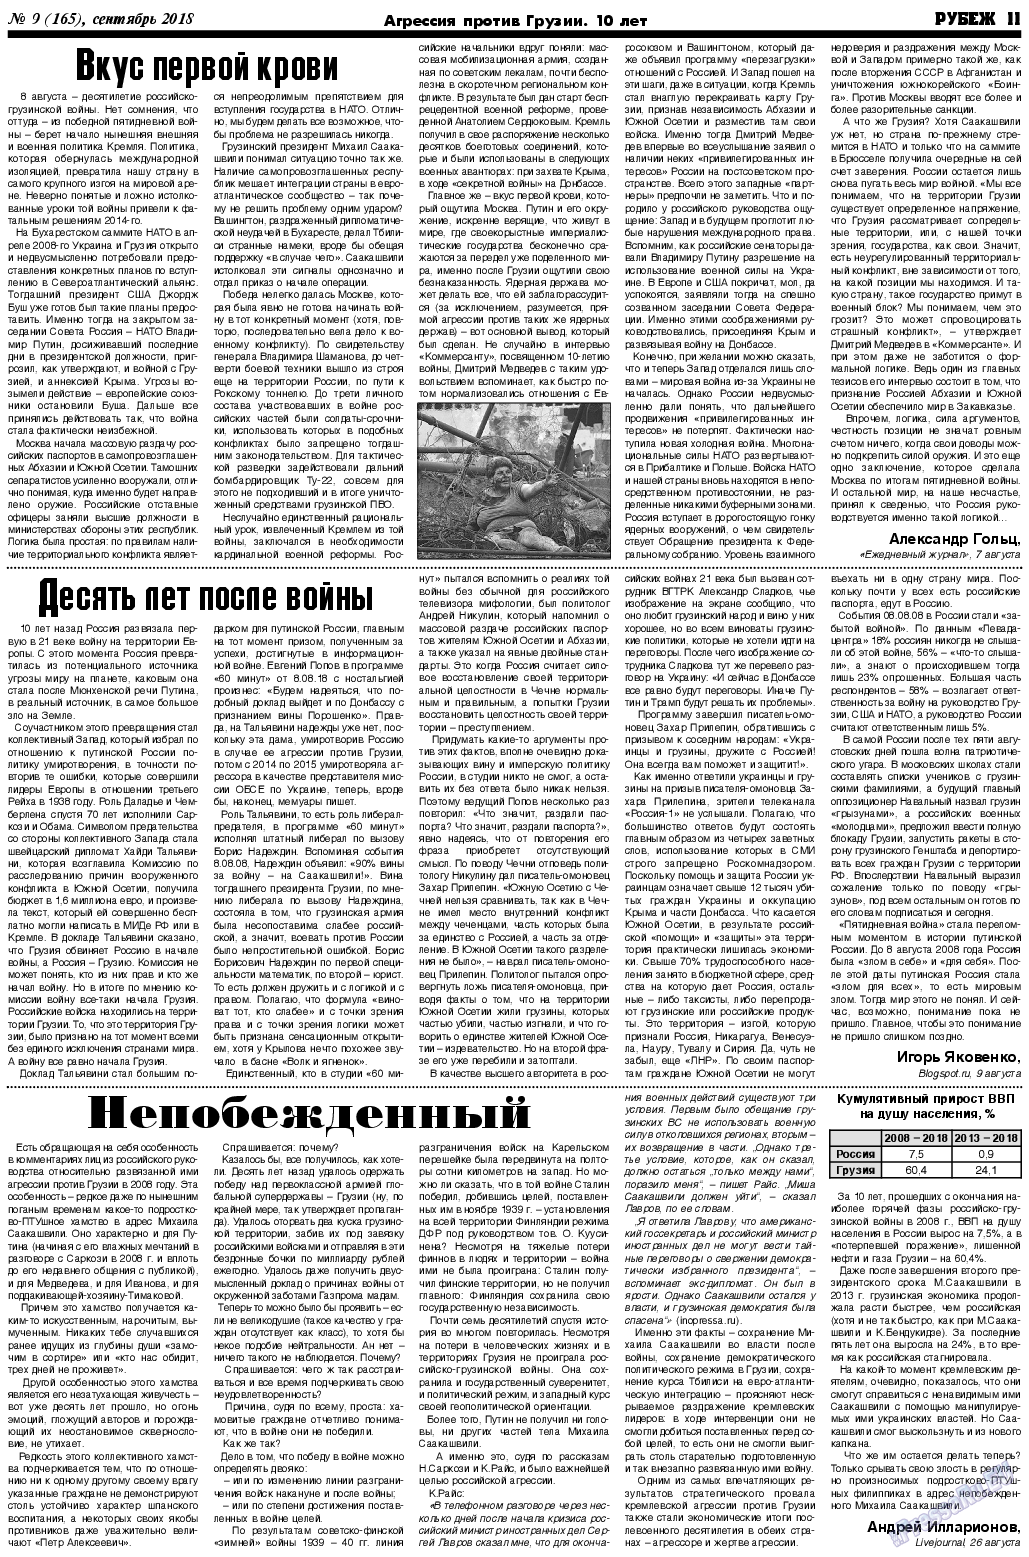 Рубеж, газета. 2018 №9 стр.11